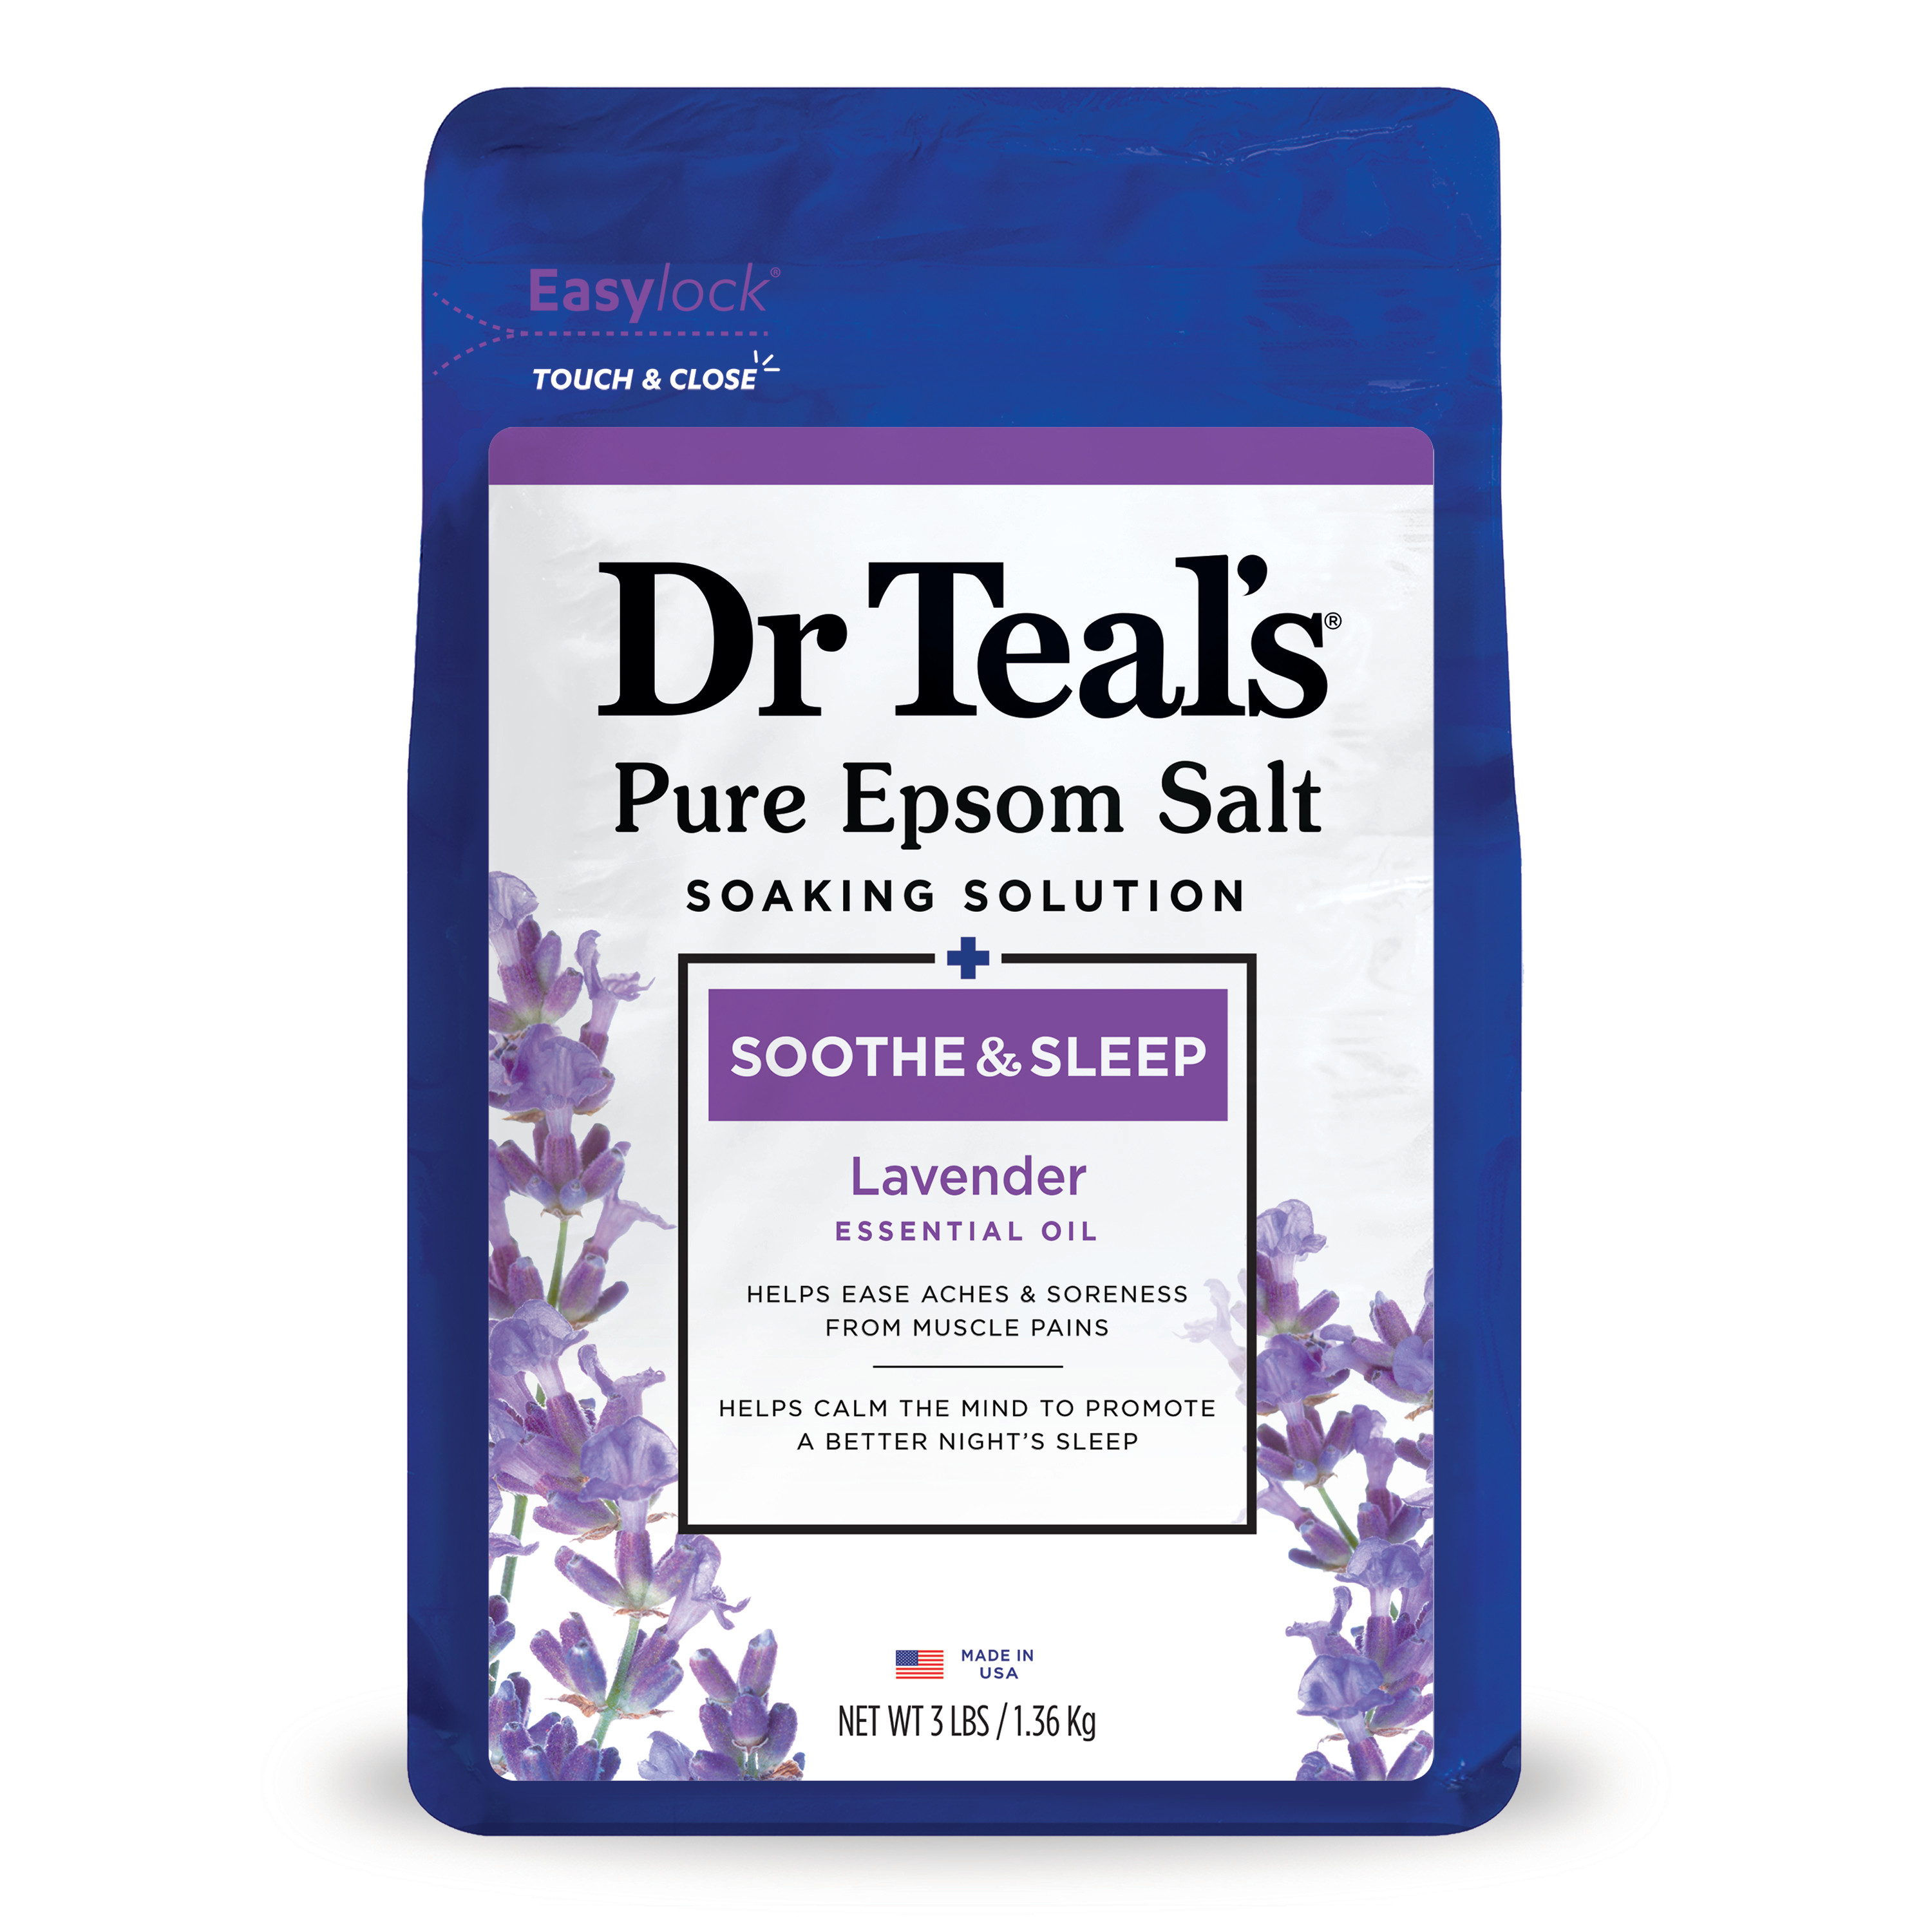 Dr Teal's Pure Epsom Salt Soak, Soothe & Sleep with Lavender, 3lbs - image 1 of 10